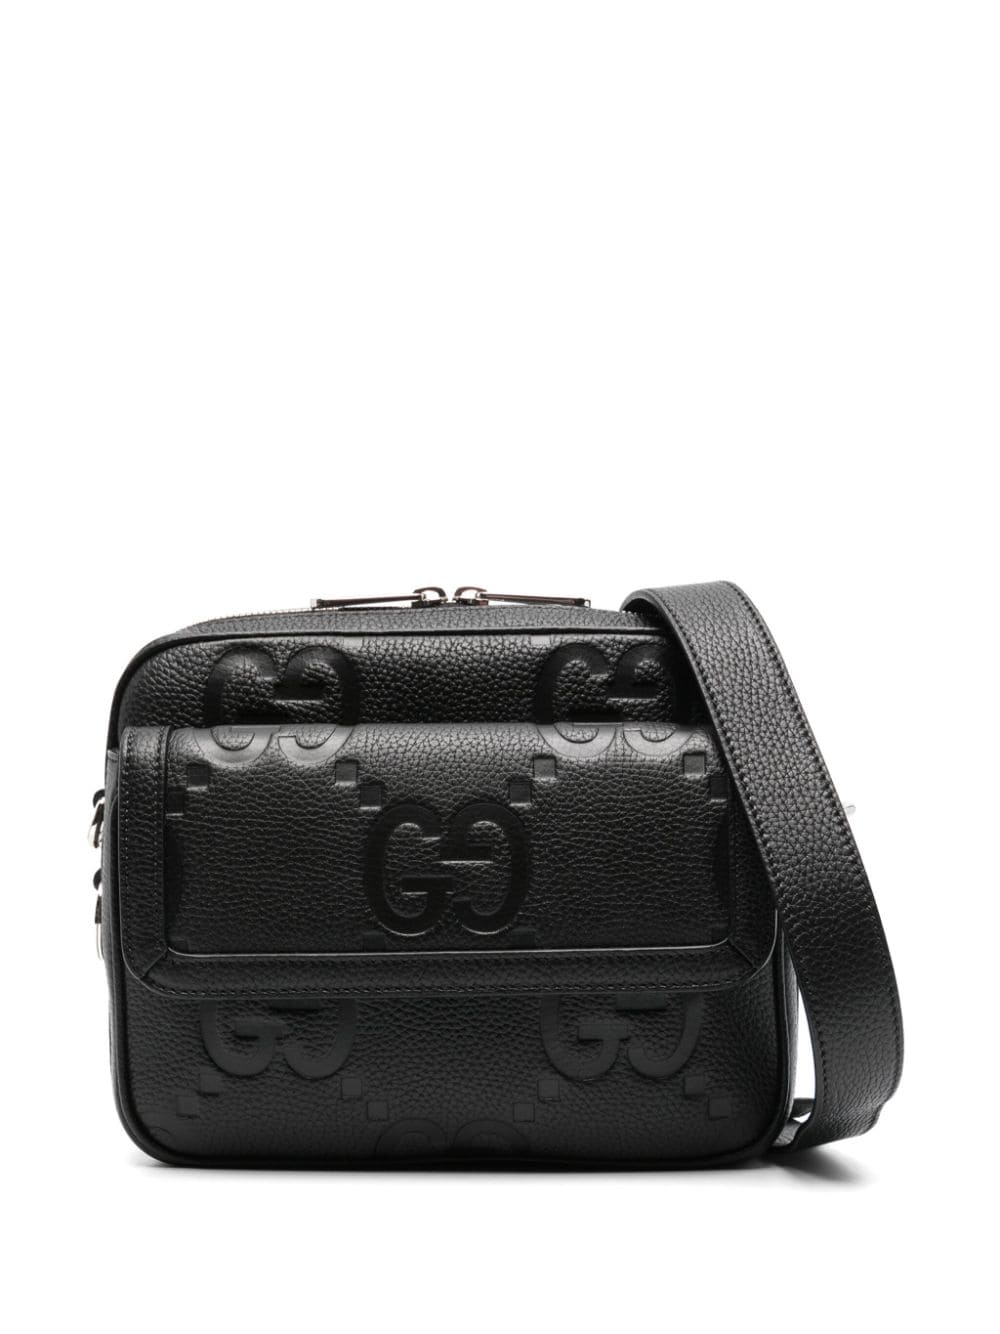 Gucci Jumbo Gg Leather Messenger Bag In Black